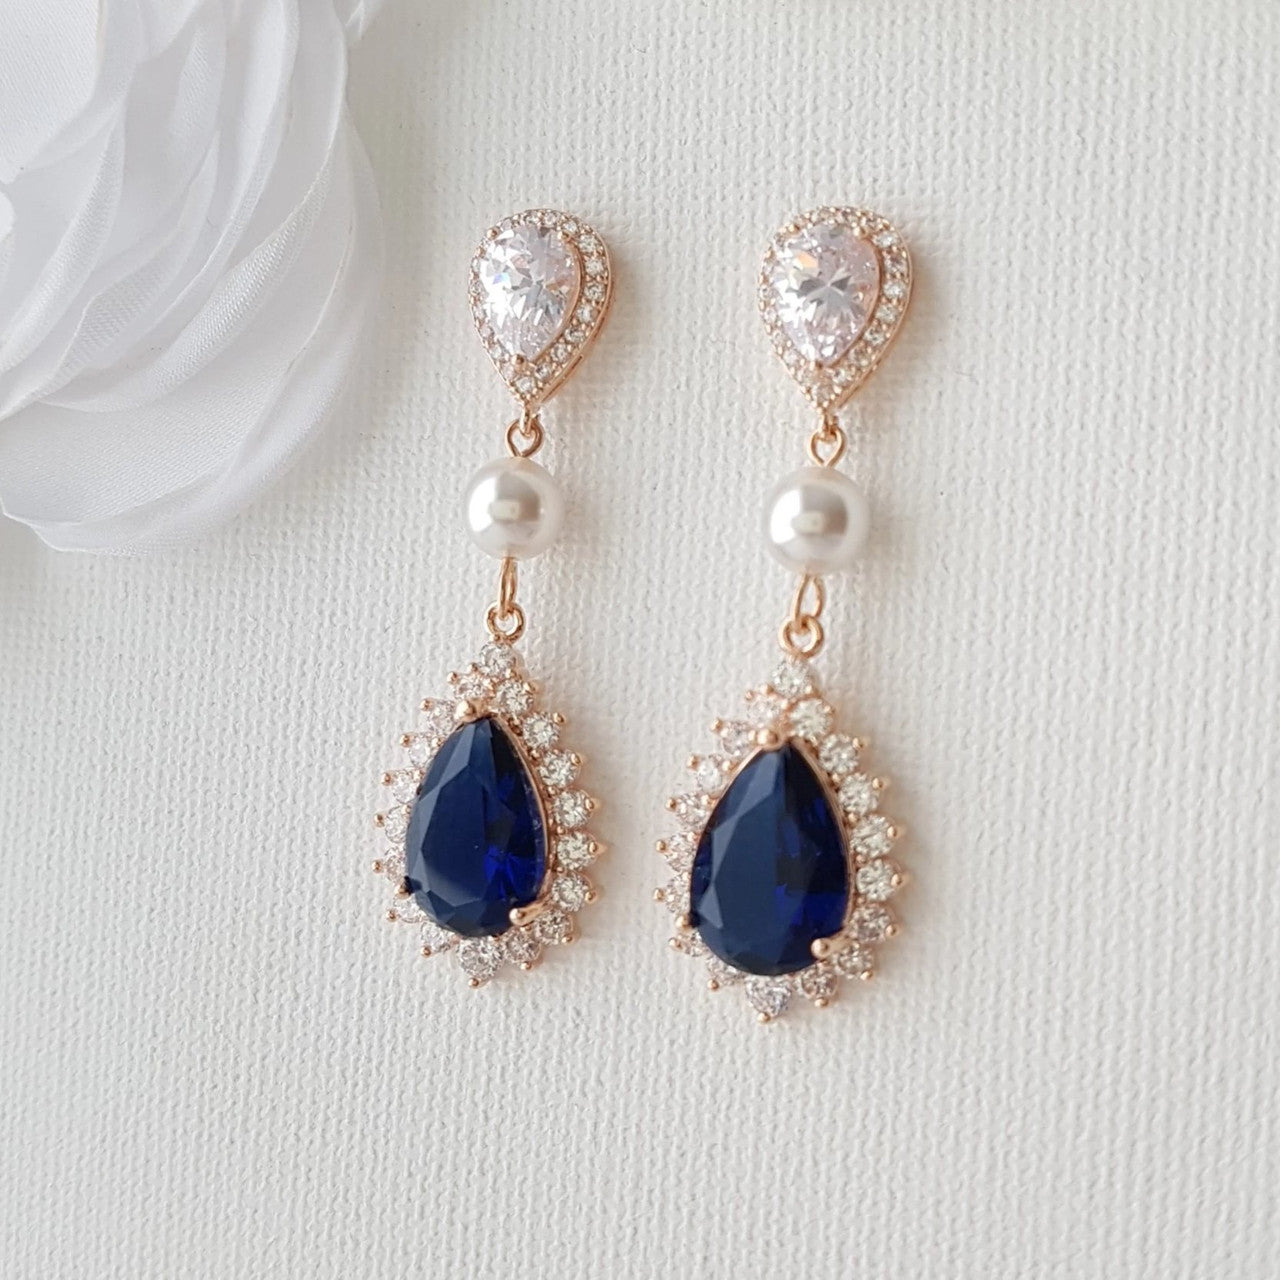 Blue Crystal Drop Earrings with Pearls For Brides, Weddings- Poetry Designs